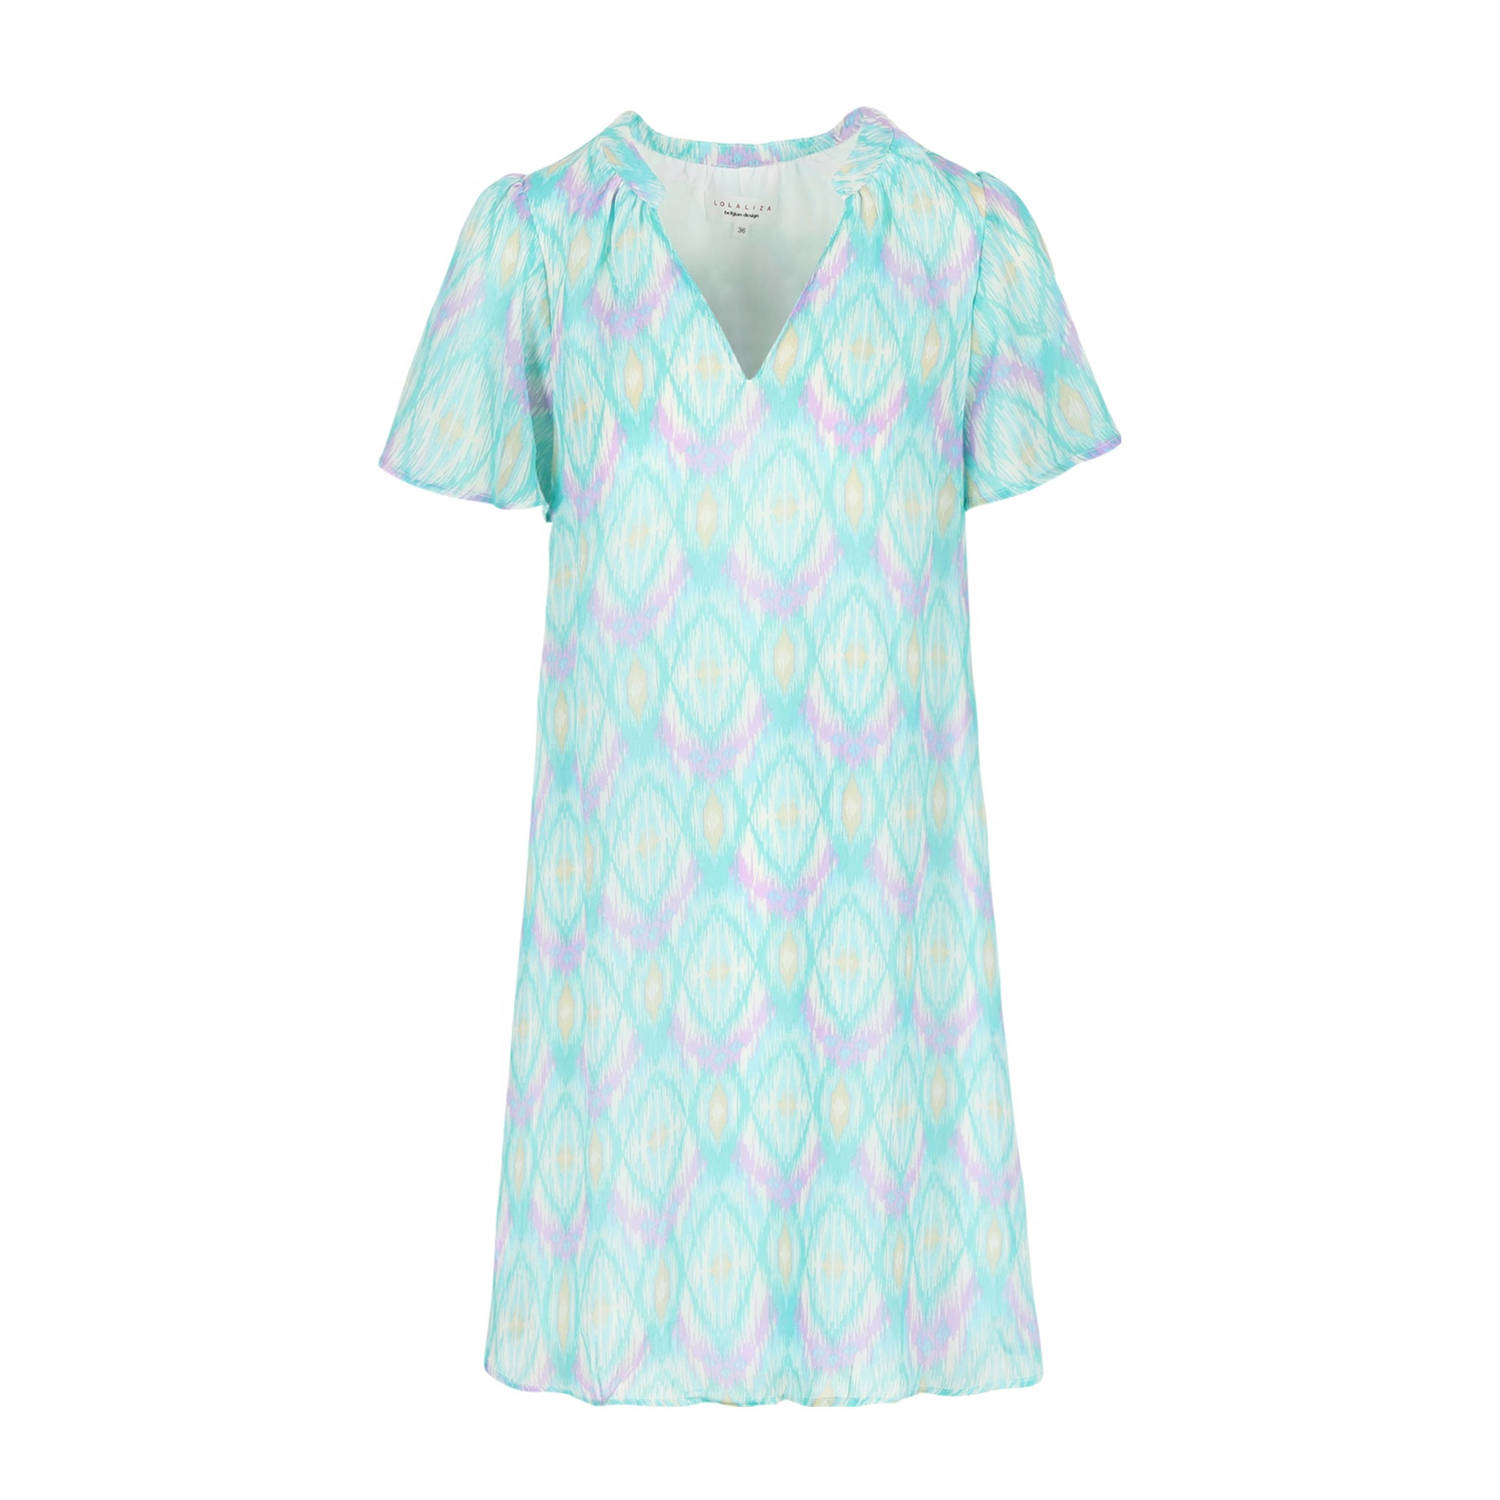 LOLALIZA jurk met all over print blauw groen roze